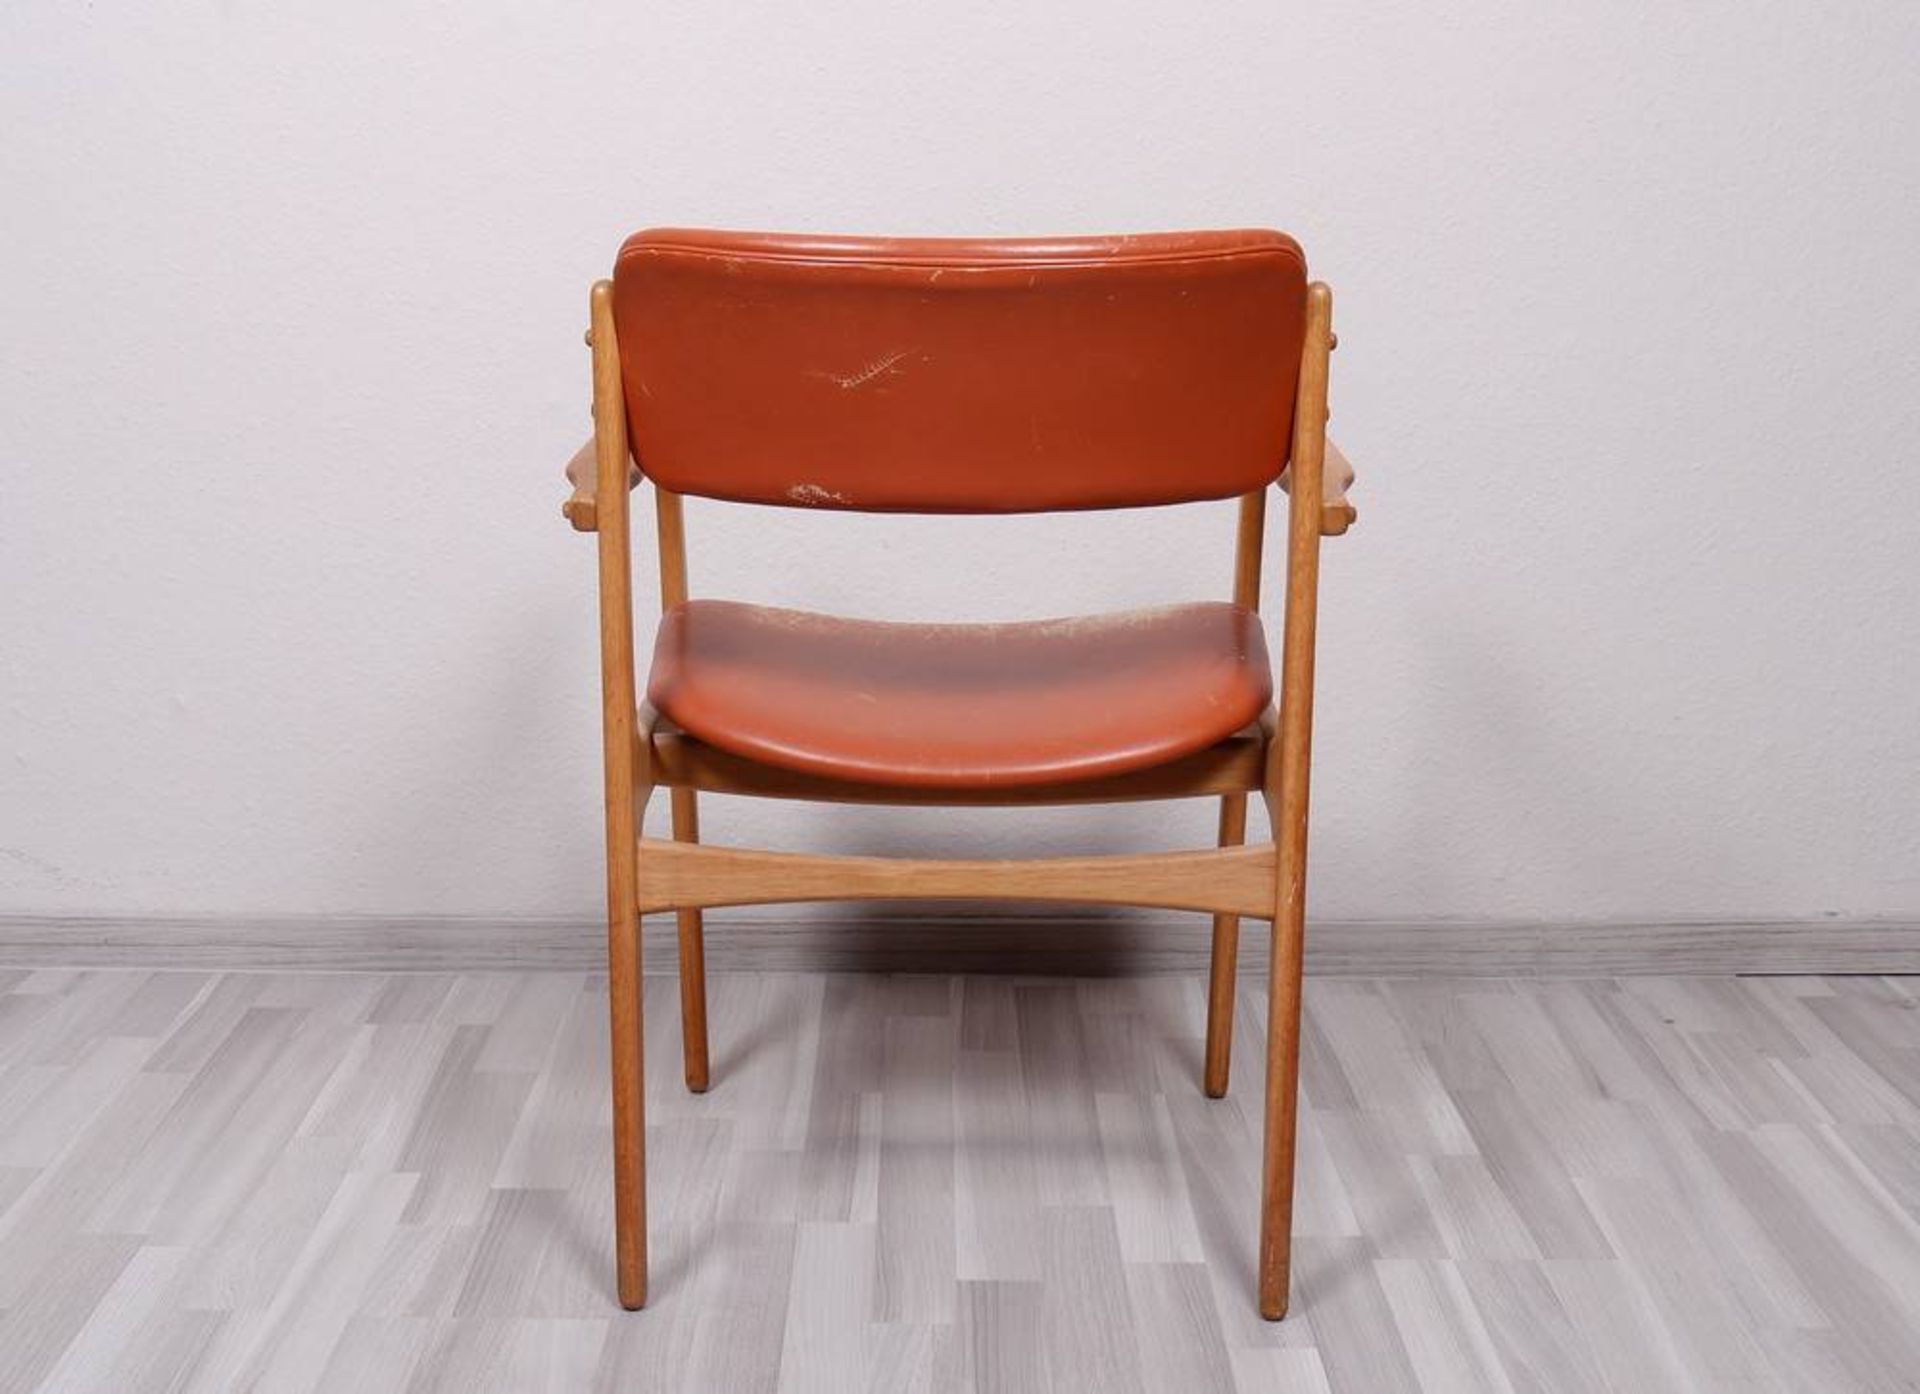 Armchair, design Erik Buch for Oddense Maskinsnedkeri / OSDS Møbler, c. 1960 - Image 3 of 5